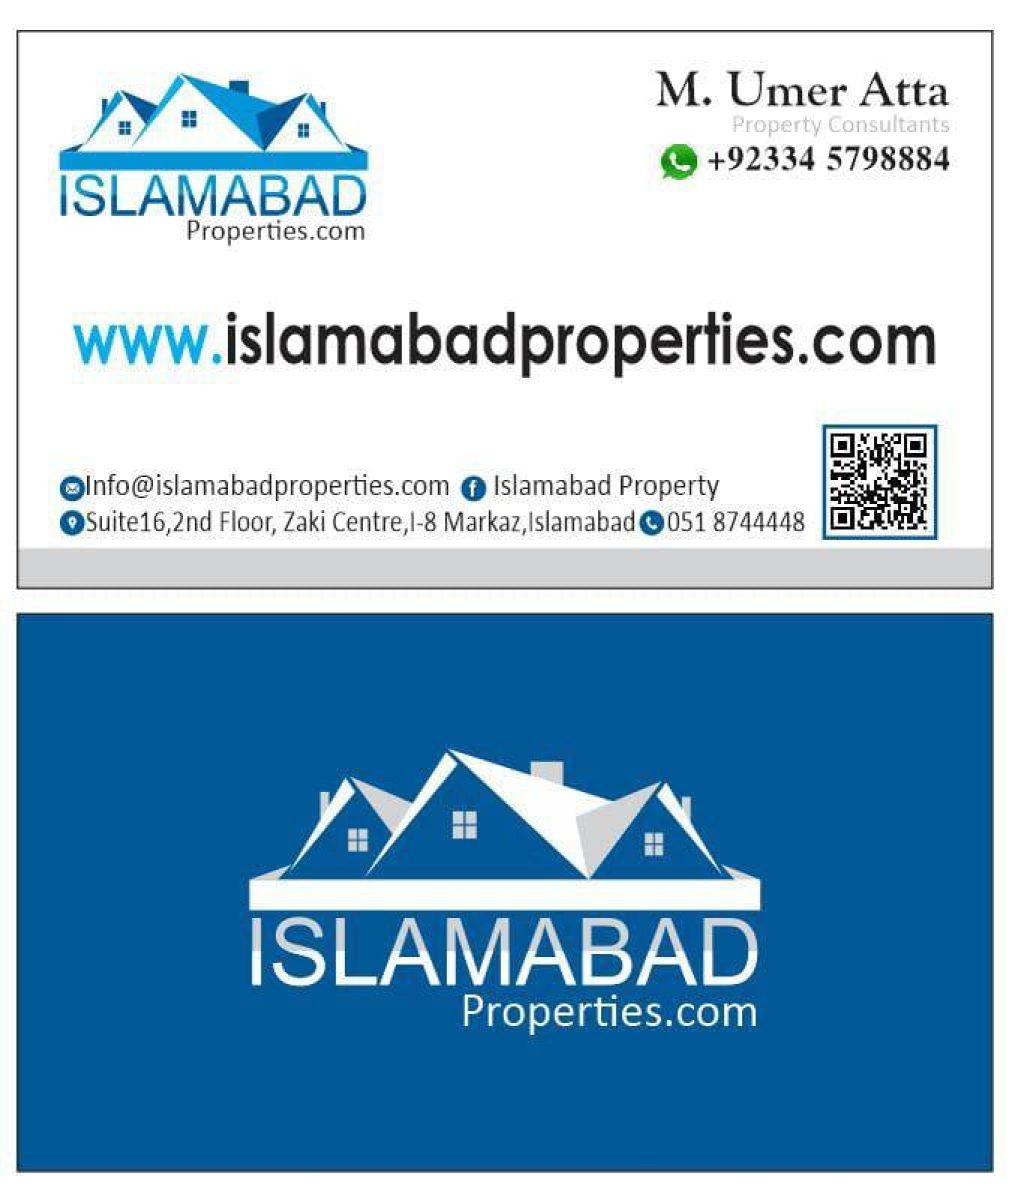 Islamabadproperties.com